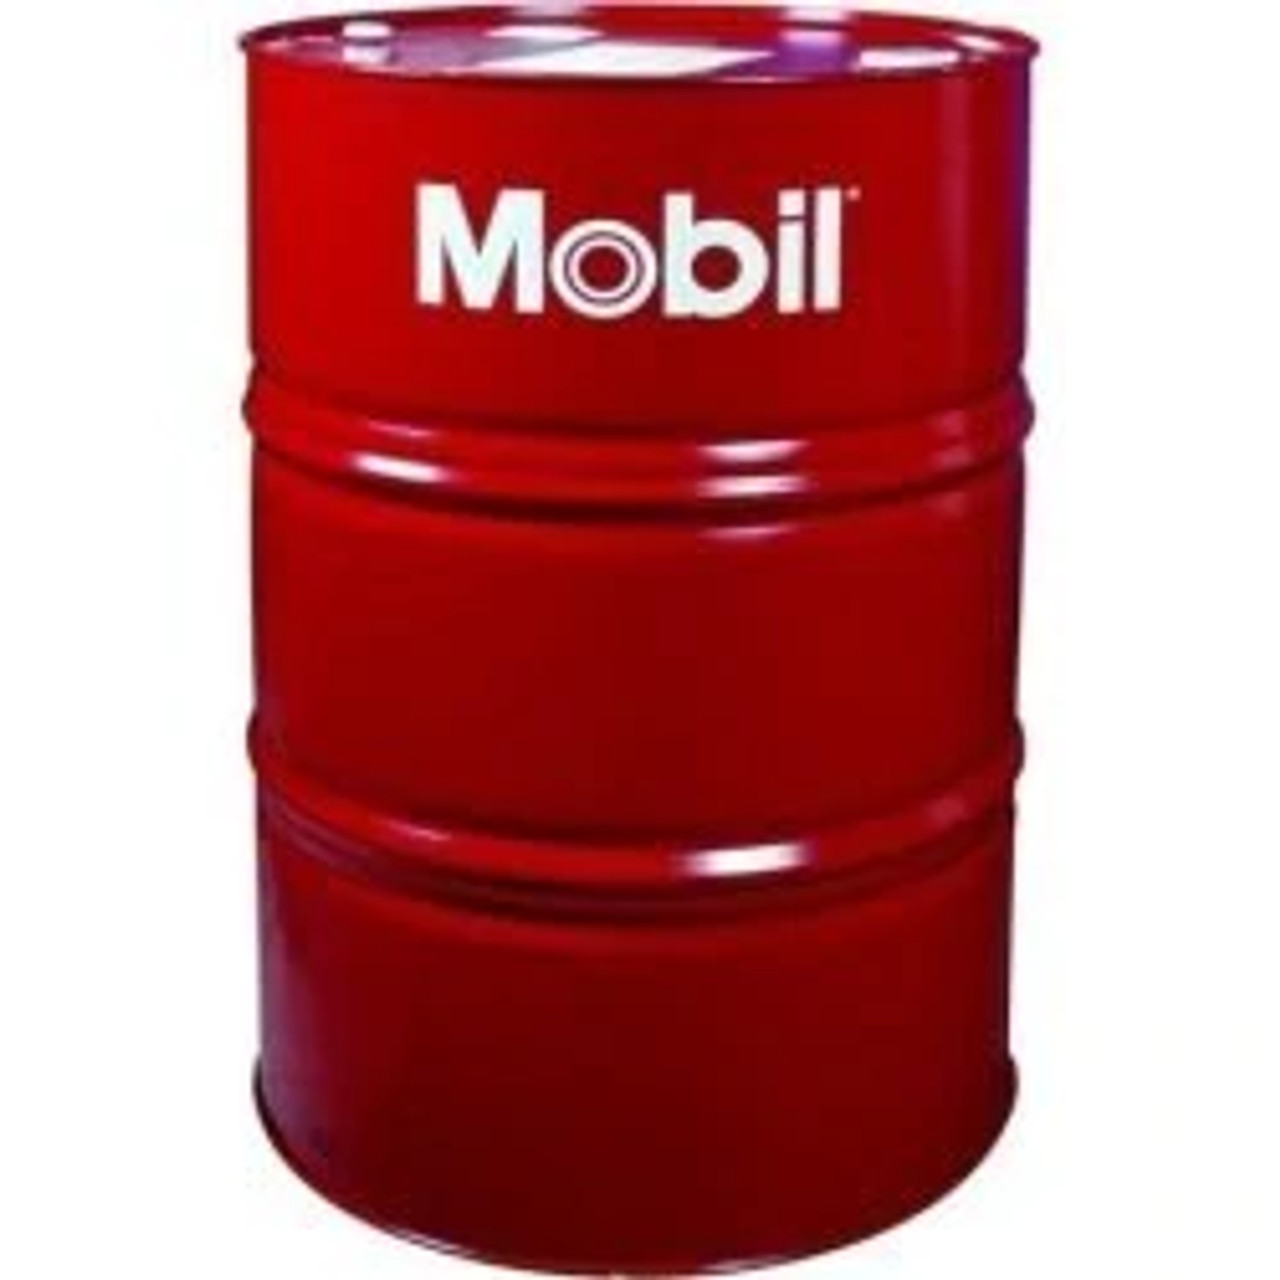 Mobil Mobiltherm 603 (Heat Transfer Fluid) - 55 Gallon Drum